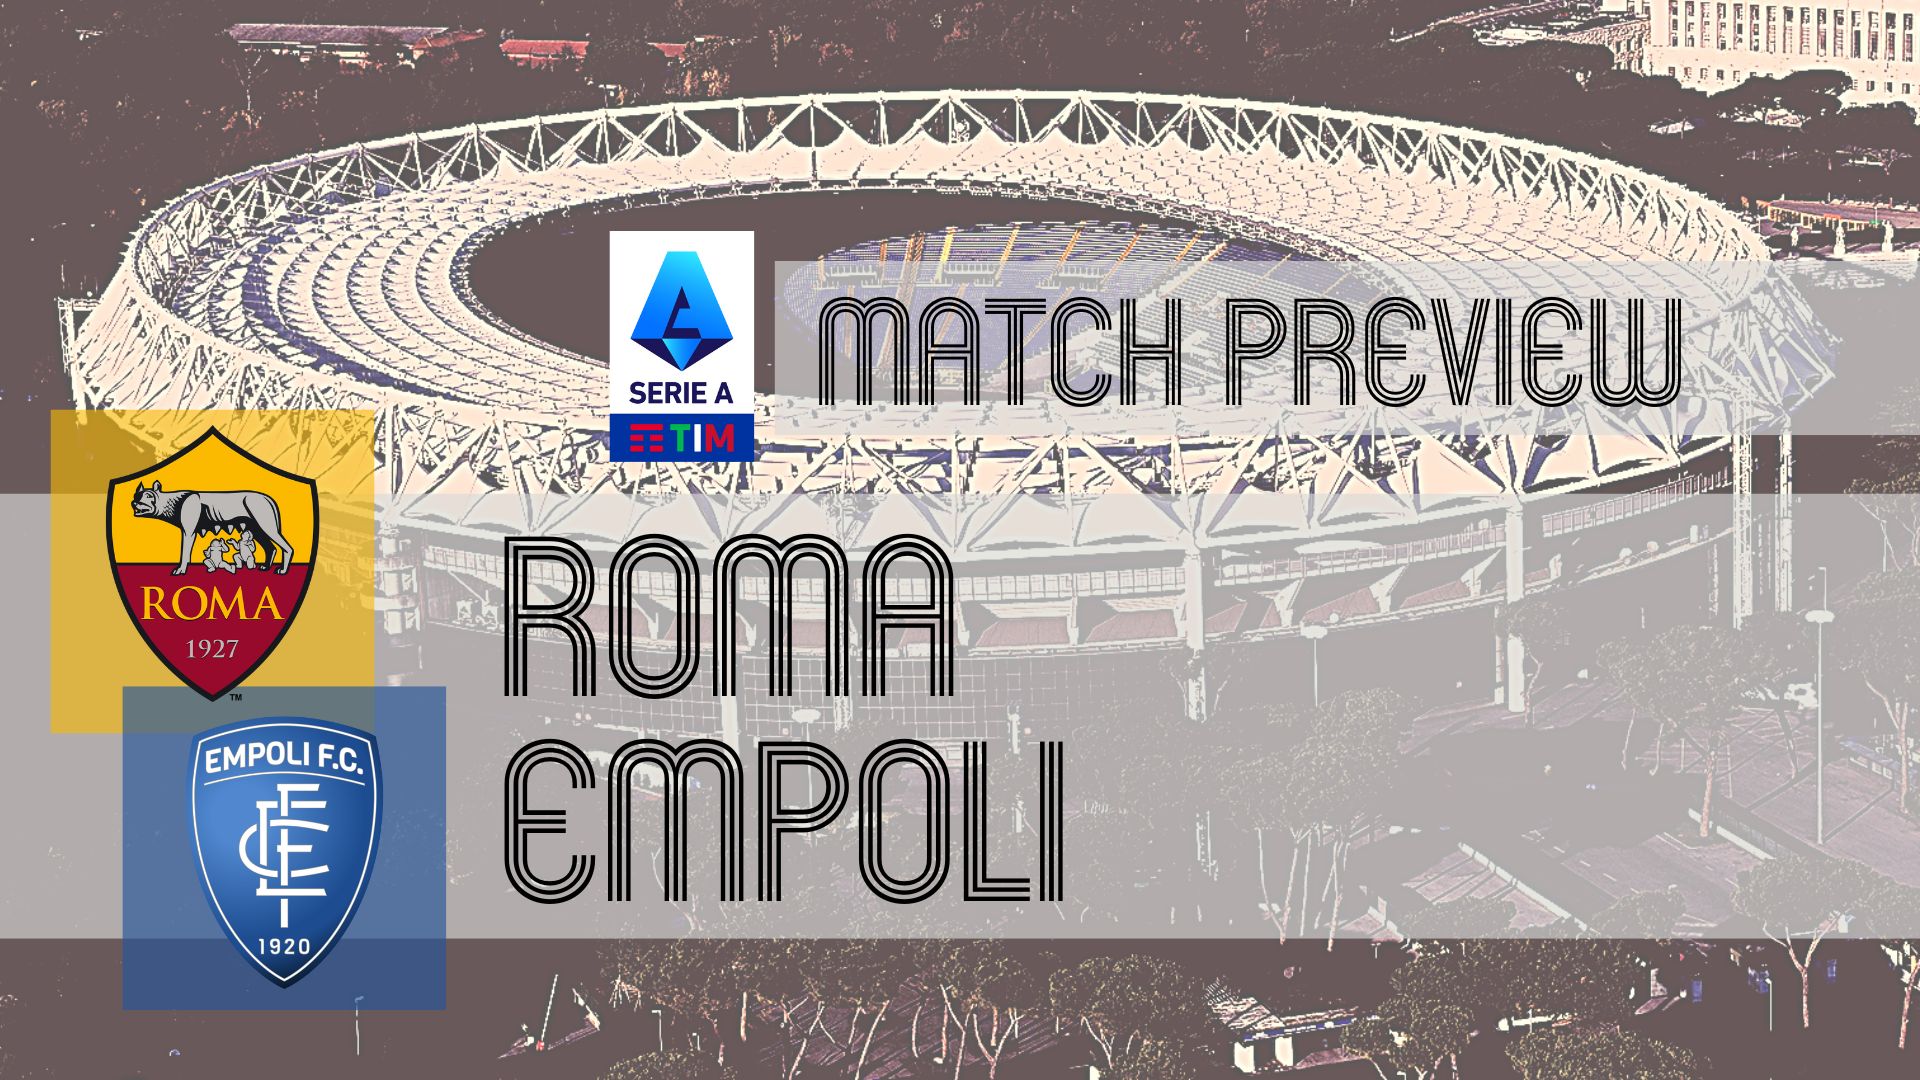 Preview: Torino vs. Empoli